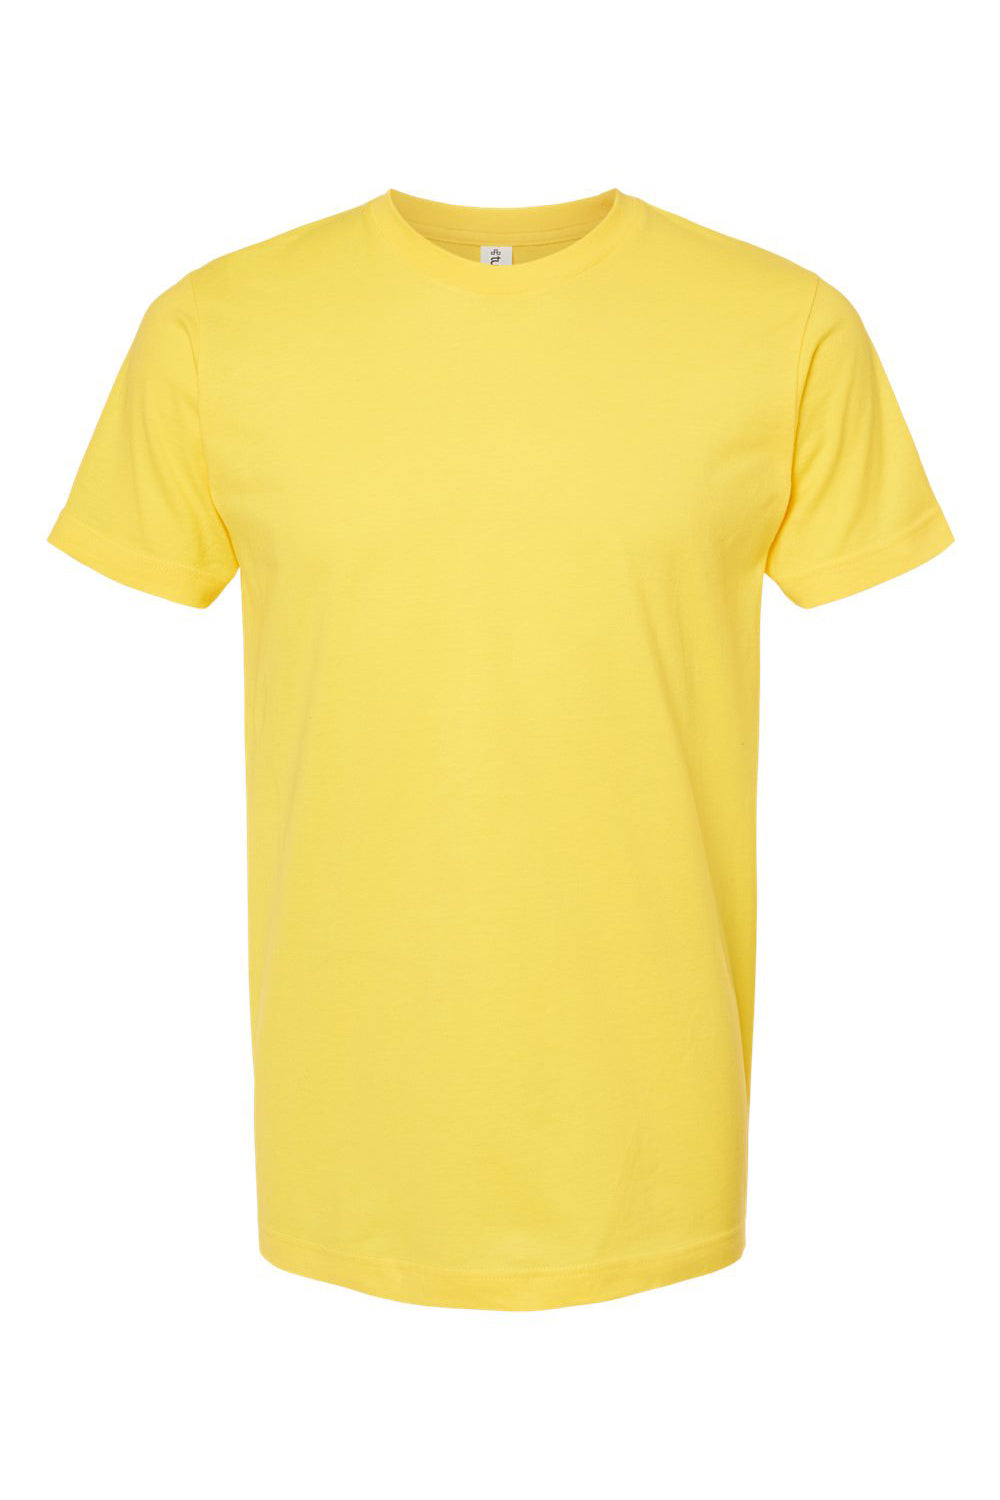 Tultex 202 Mens Fine Jersey Short Sleeve Crewneck T-Shirt Sunshine Yellow Flat Front